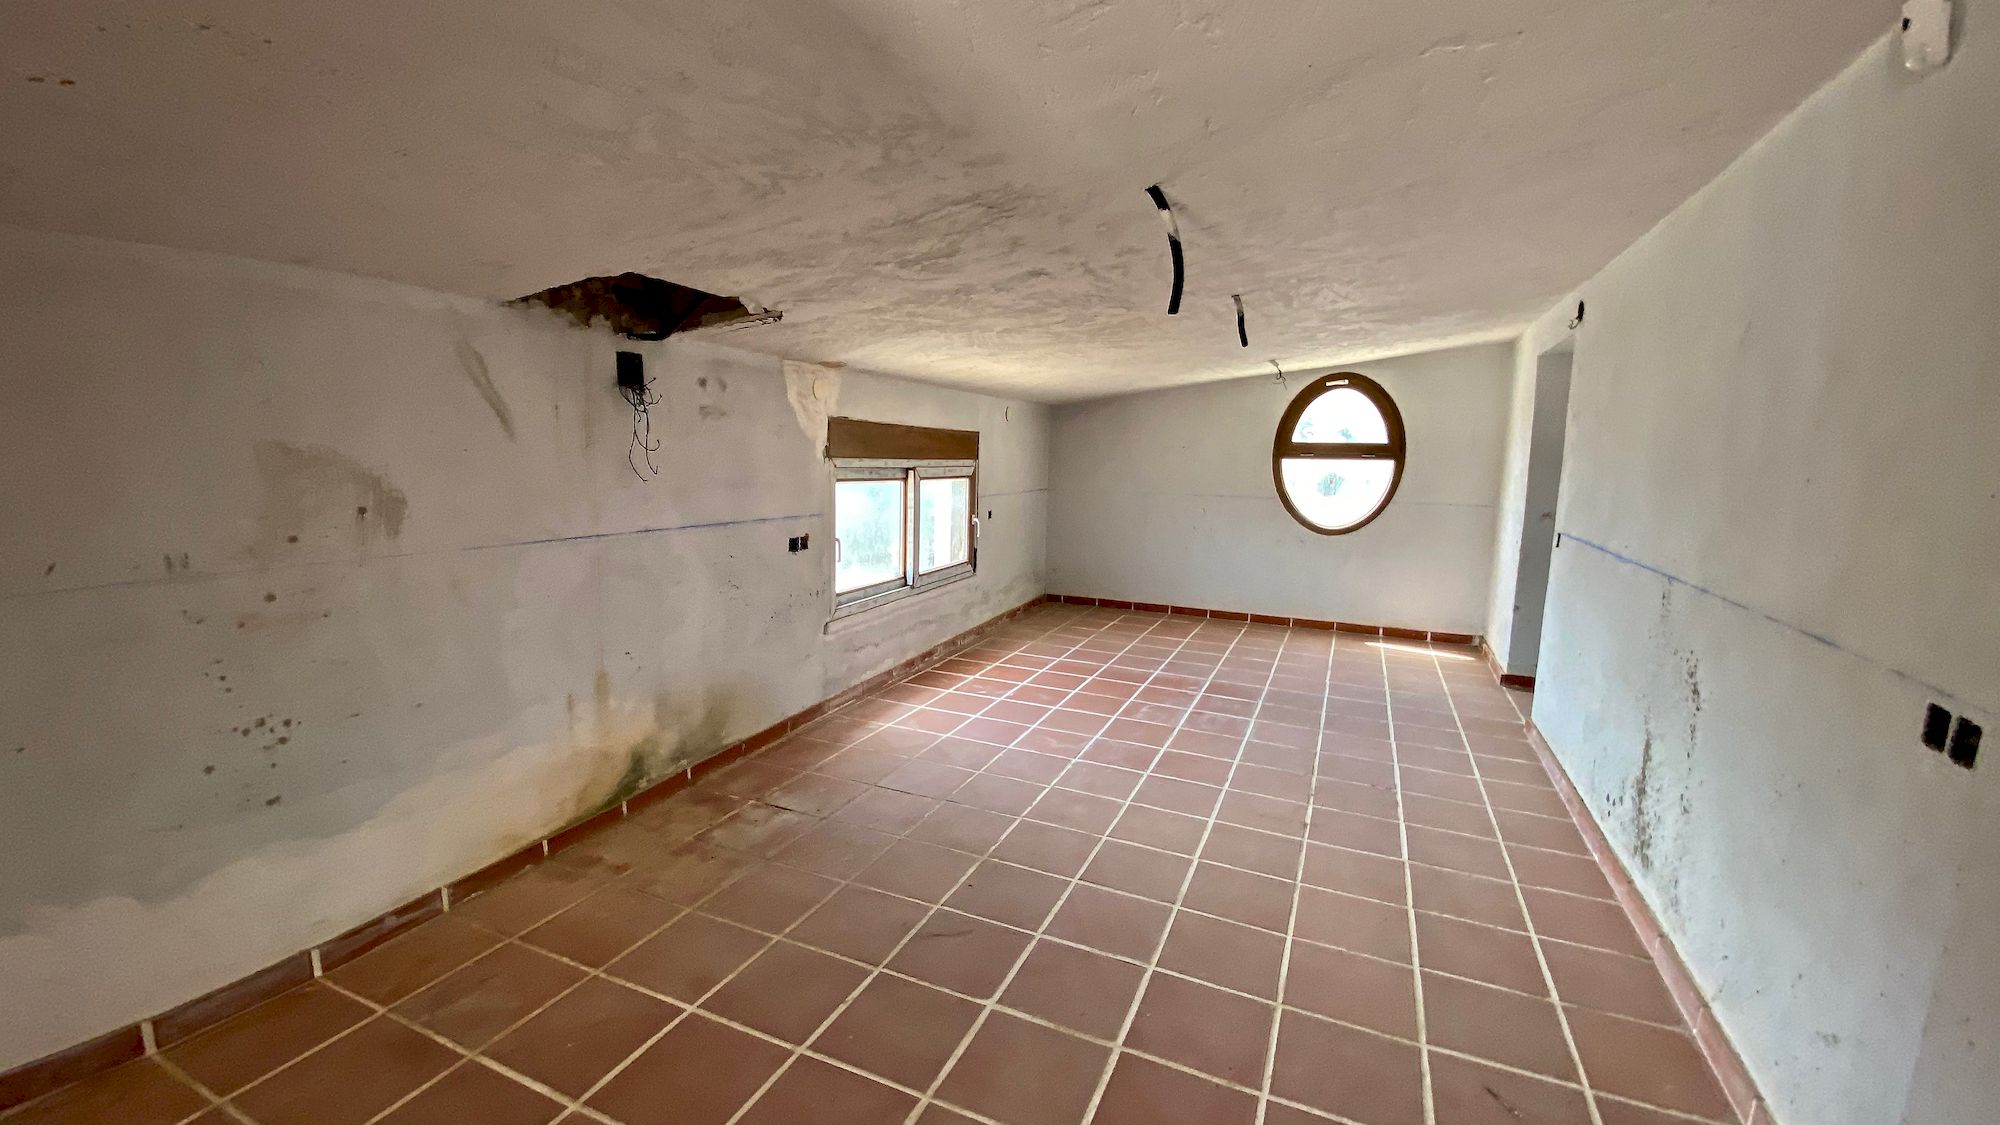 Ibizan style villa for sale in Javea - To finish building